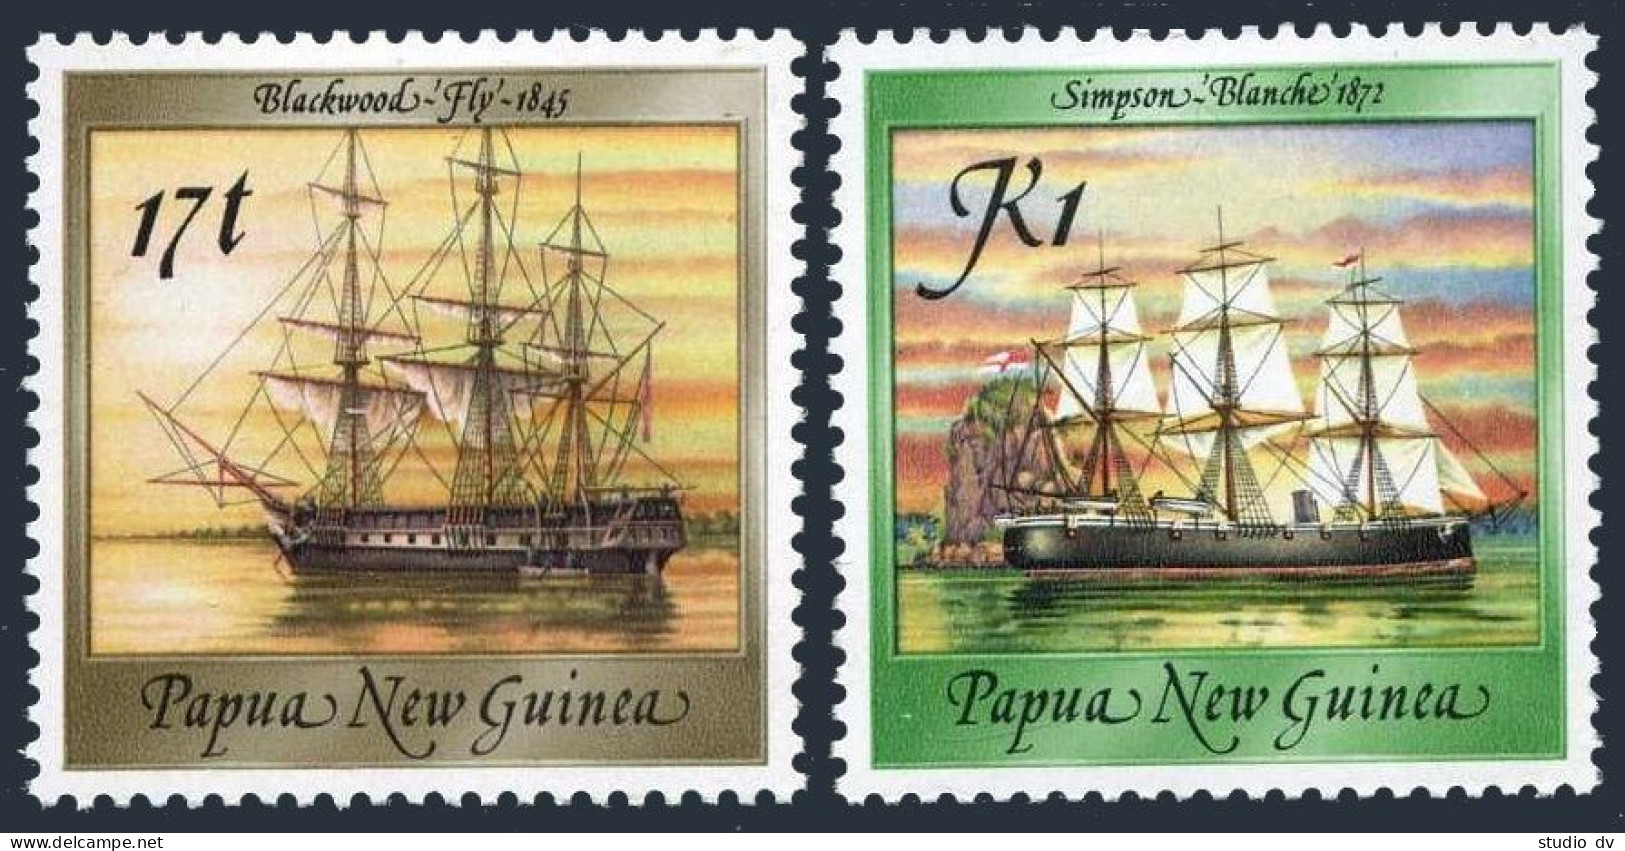 Papua New Guinea 667,675 Set 3,MNH.Michel 565-566. Sailing Ships,03.01.1988. - Guinea (1958-...)